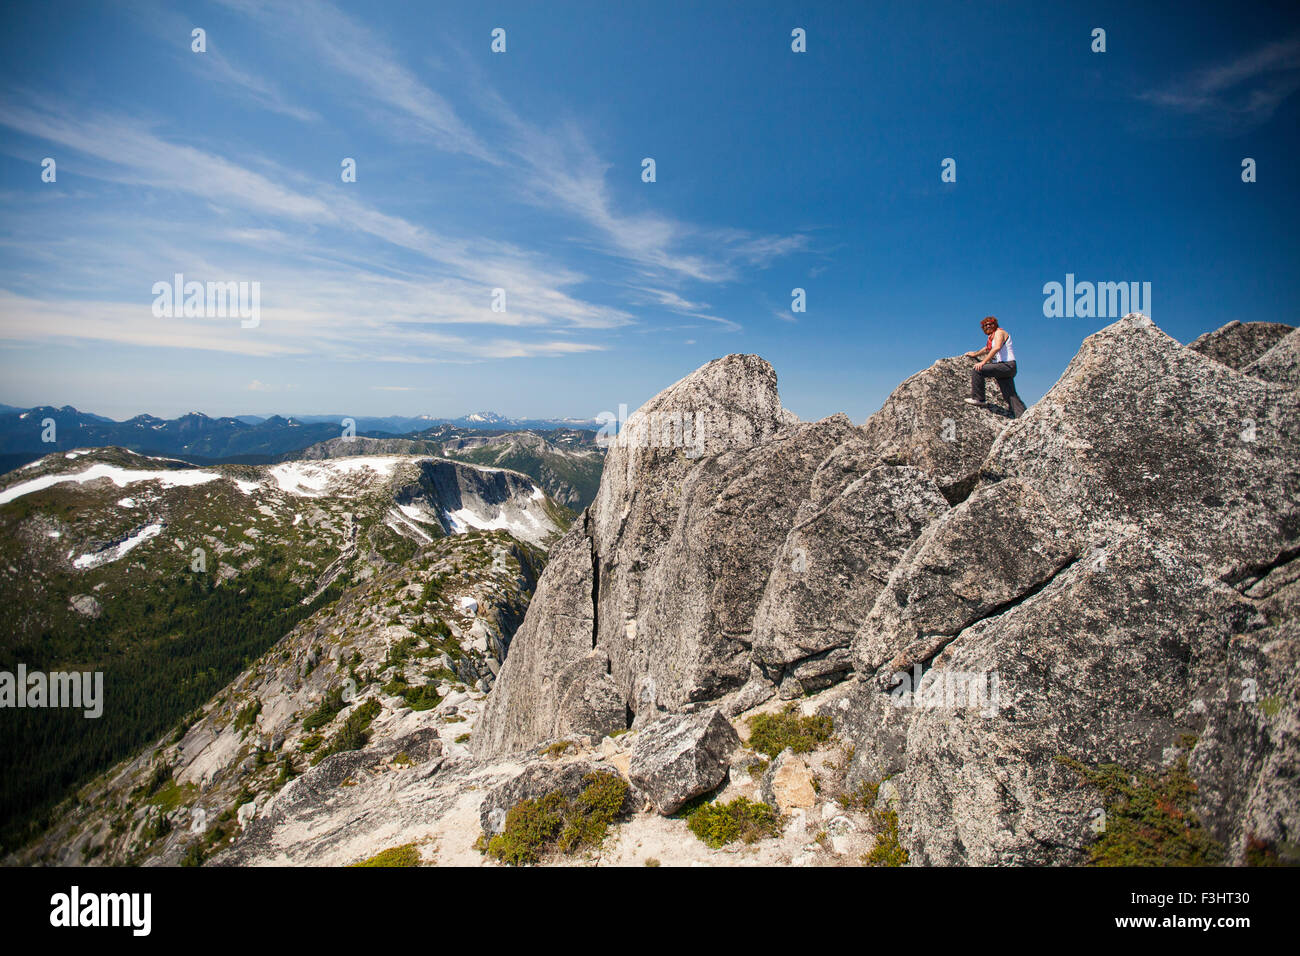 Un homme escalade de roche de granit en Colombie-Britannique, Canada. Banque D'Images